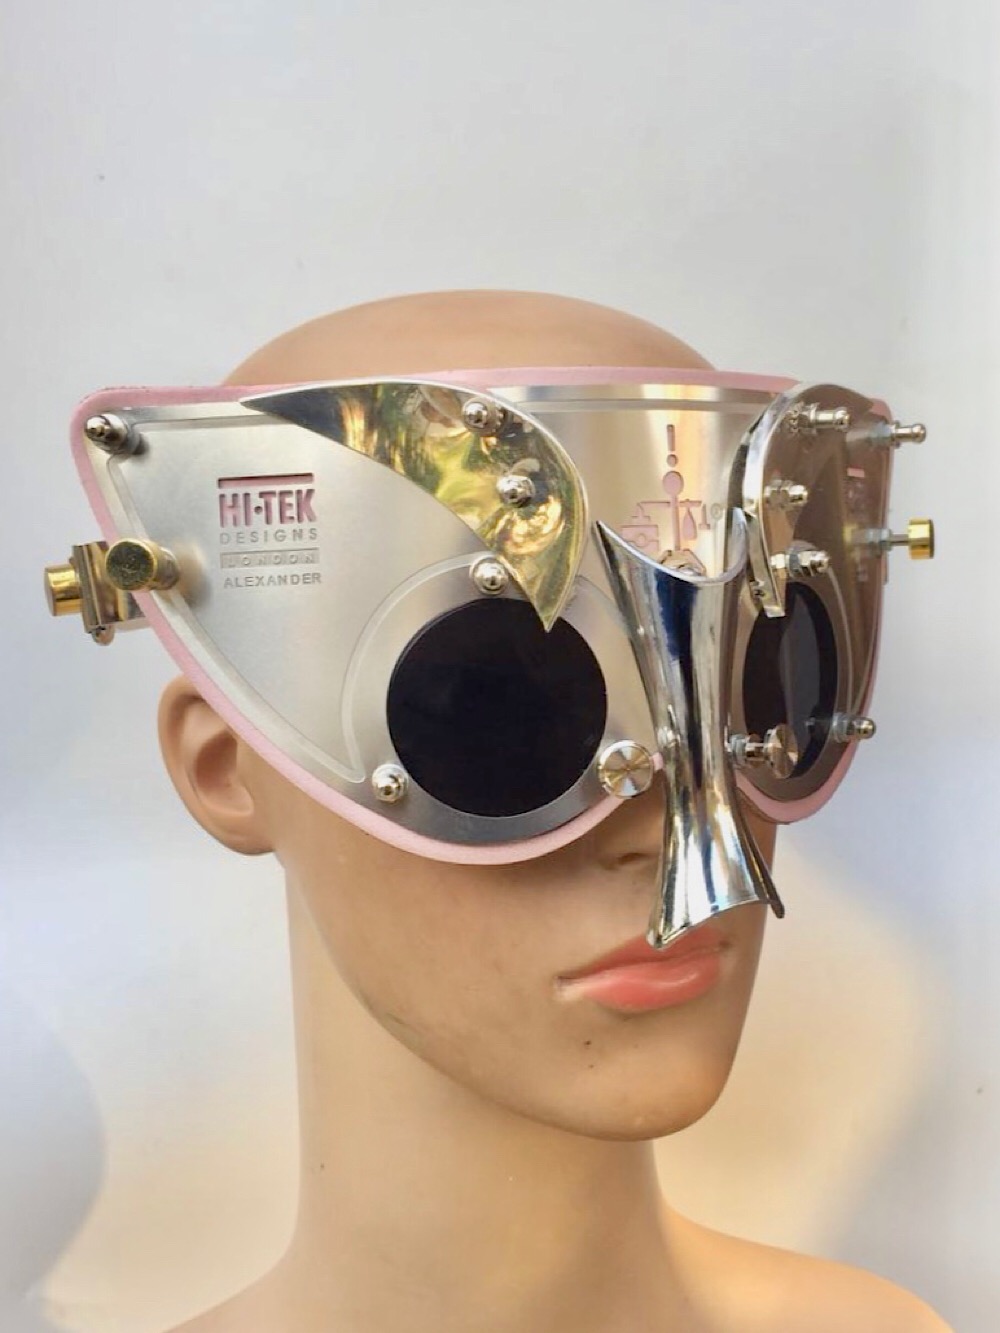 Glassesメガネ【希少】Hi-tek design London lady Gaga.